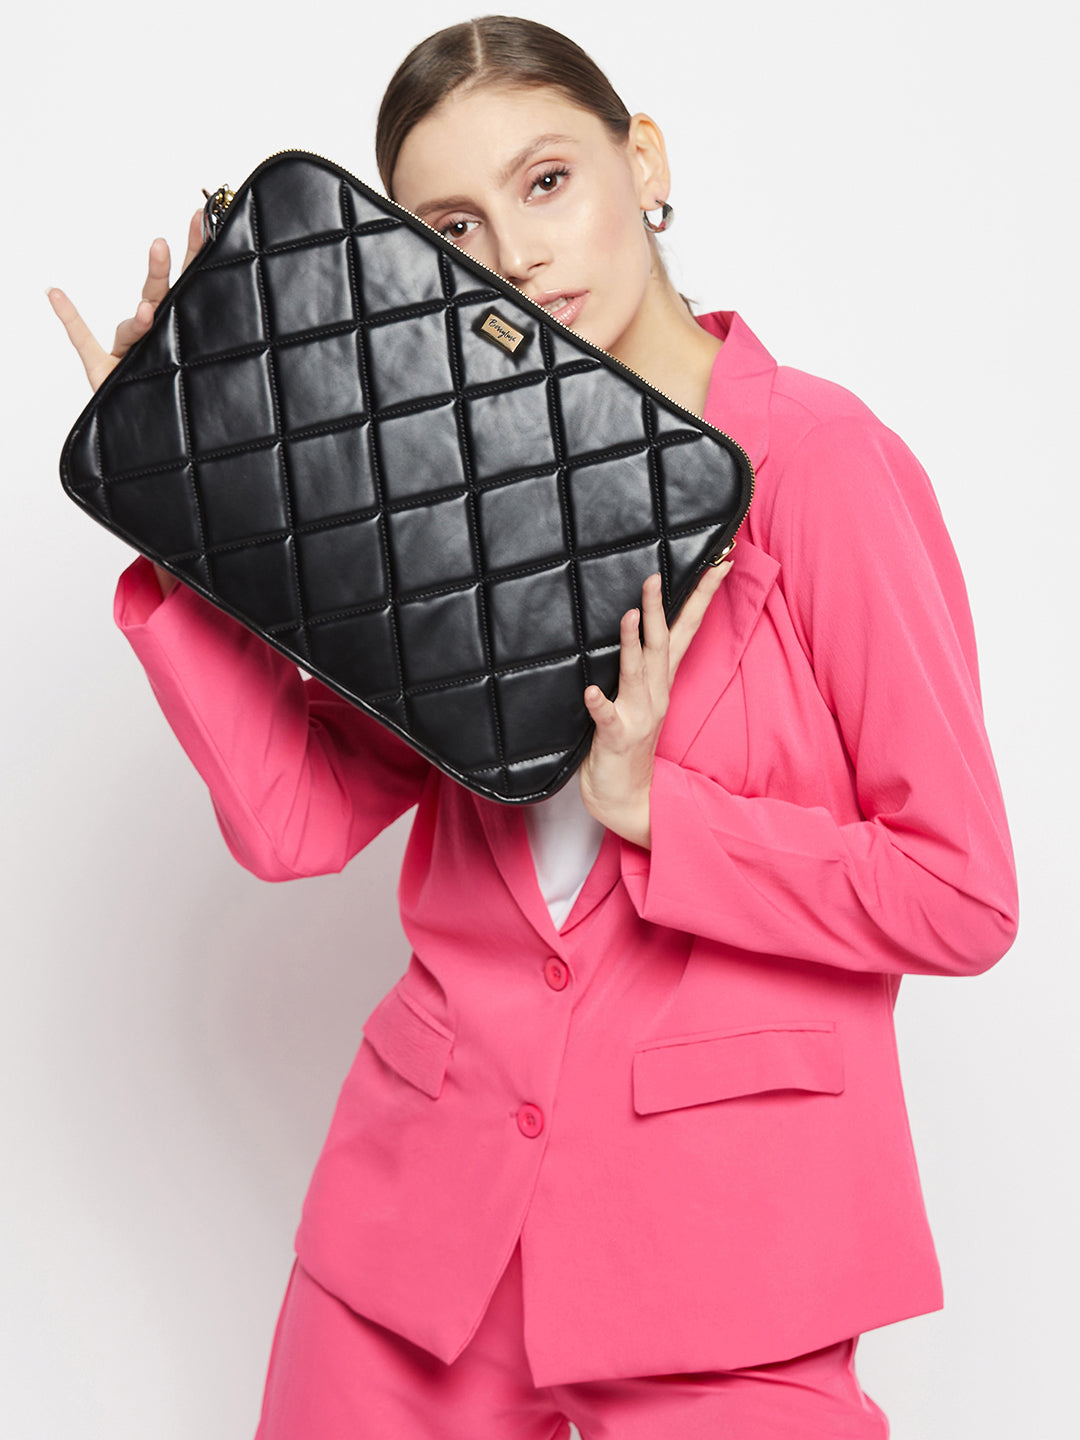 Buy Black Laptop Bags for Women by KLEIO Online  Ajiocom